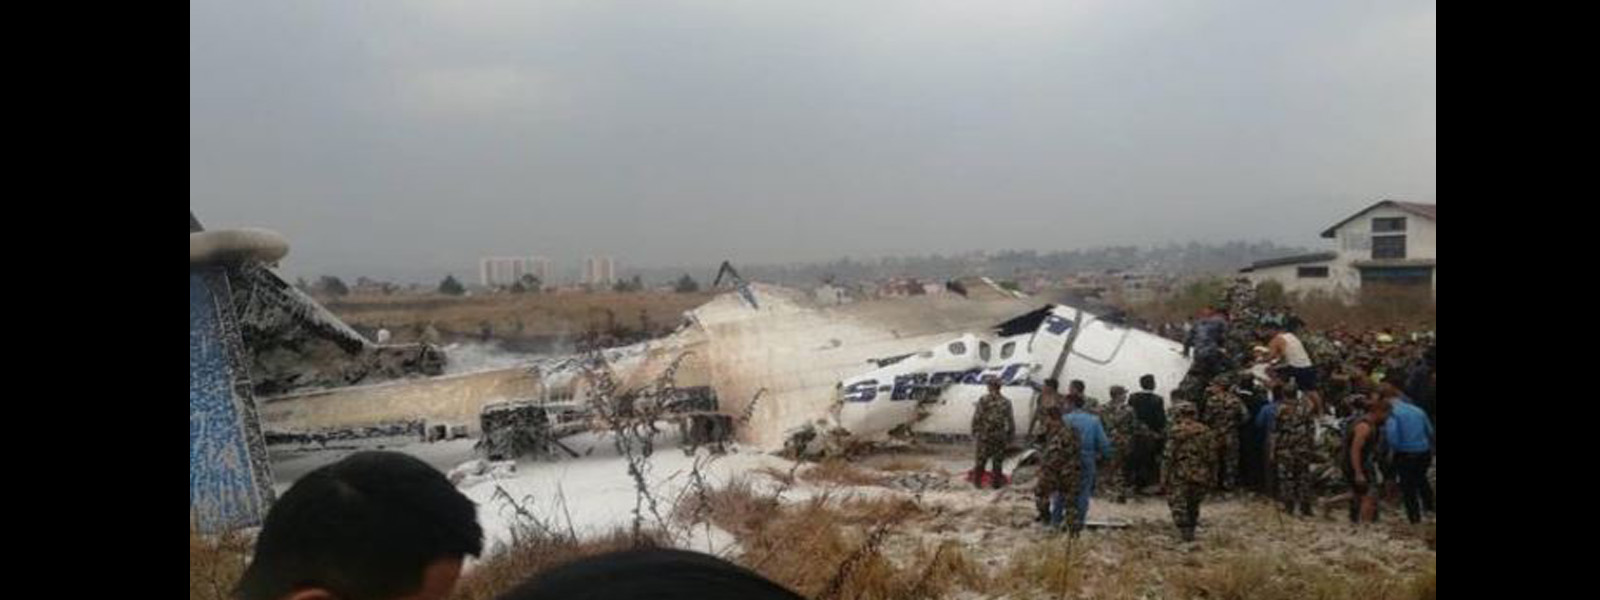 Kathmandu Airport crash: At least 40 dead